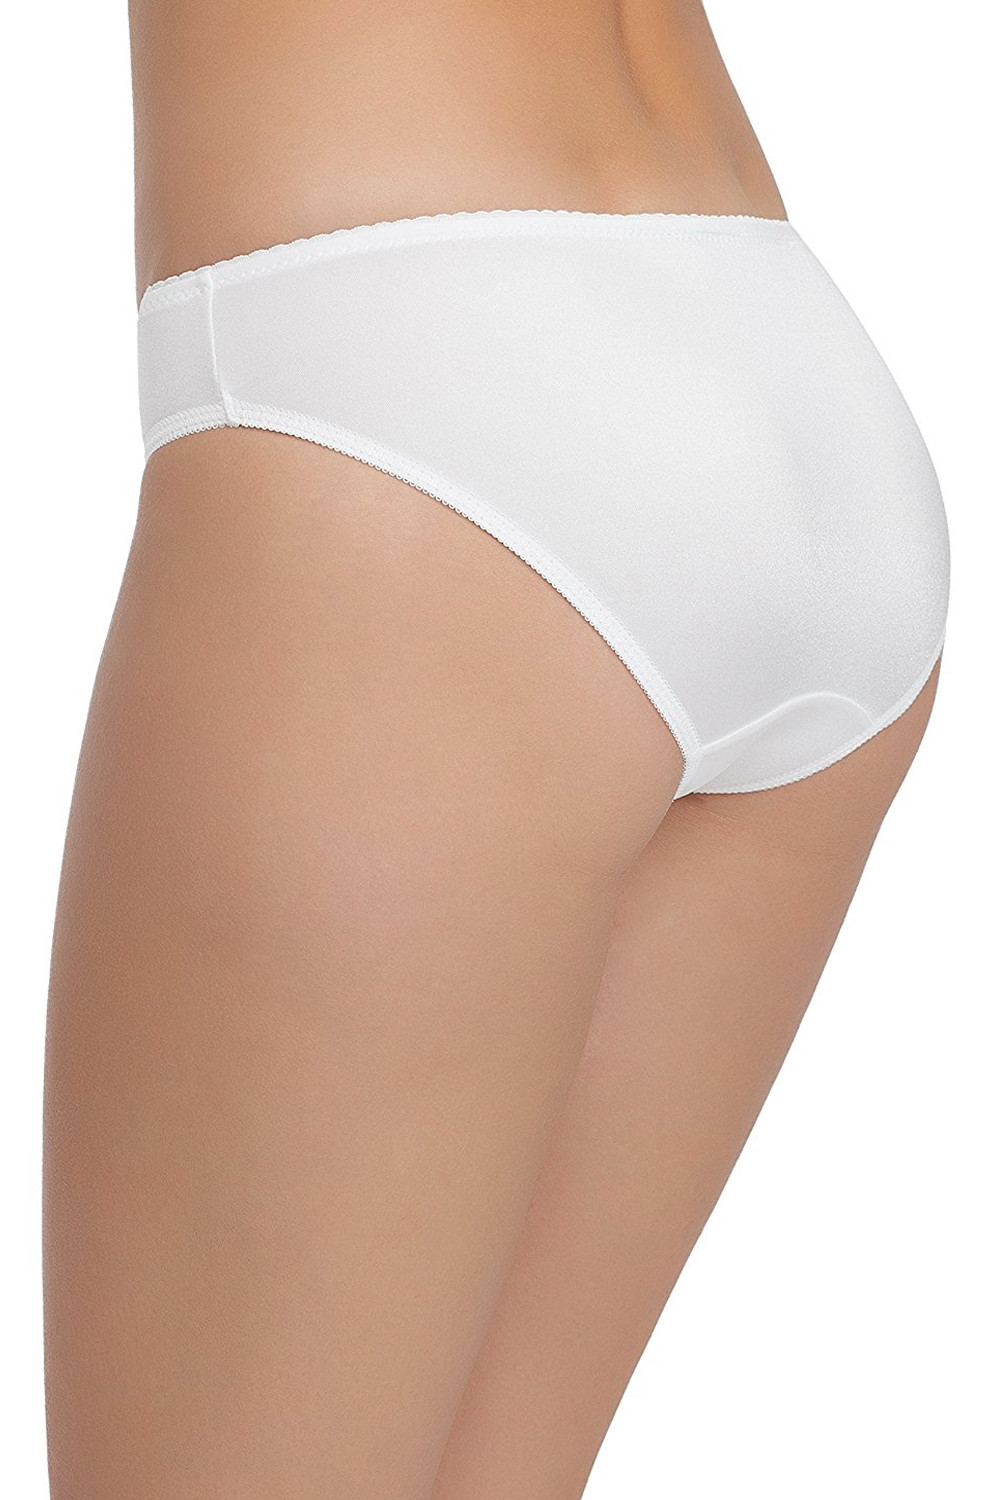 Dámské kalhotky model 5682358 white Bílá XL - Vena